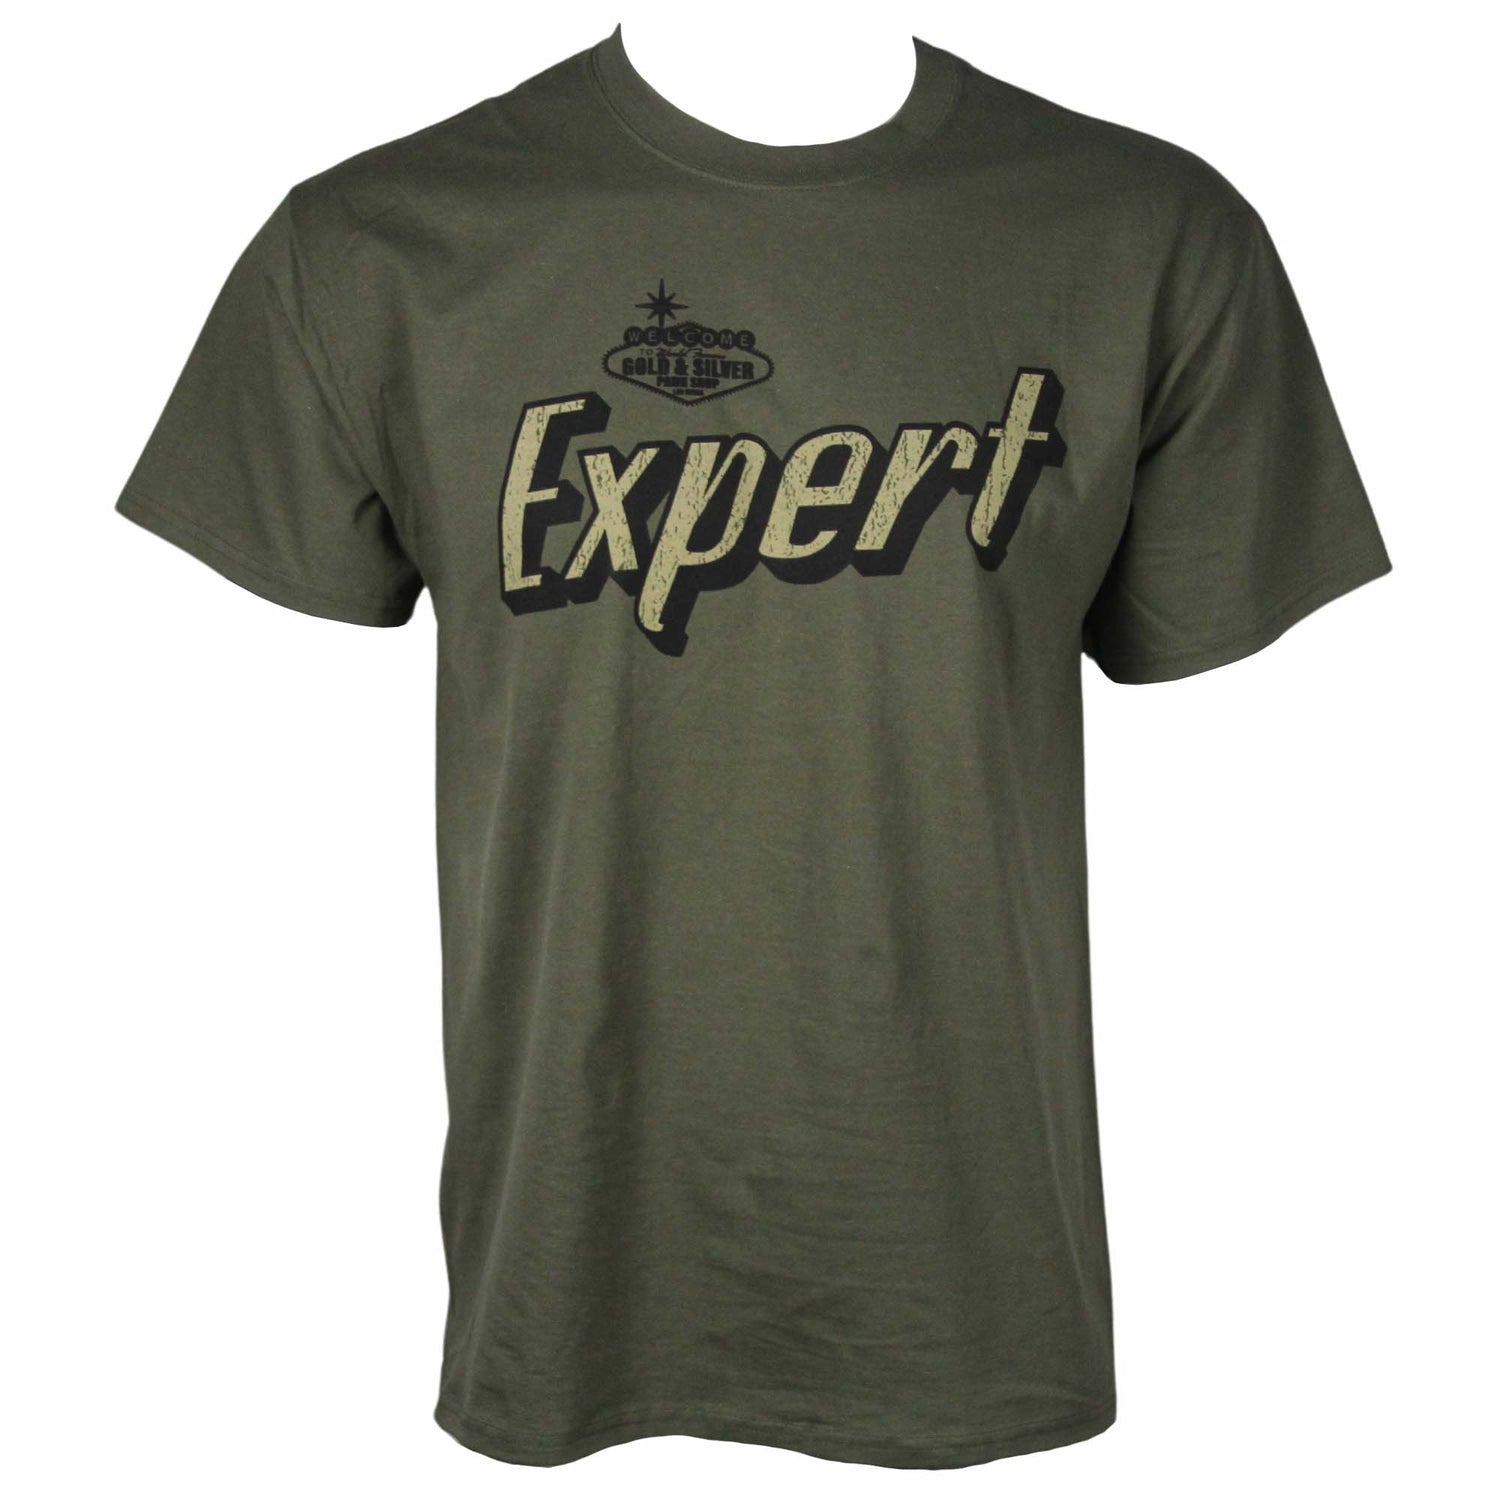 Gold & Silver Pawn Shop "Expert" Round Neck T-Shirt Green